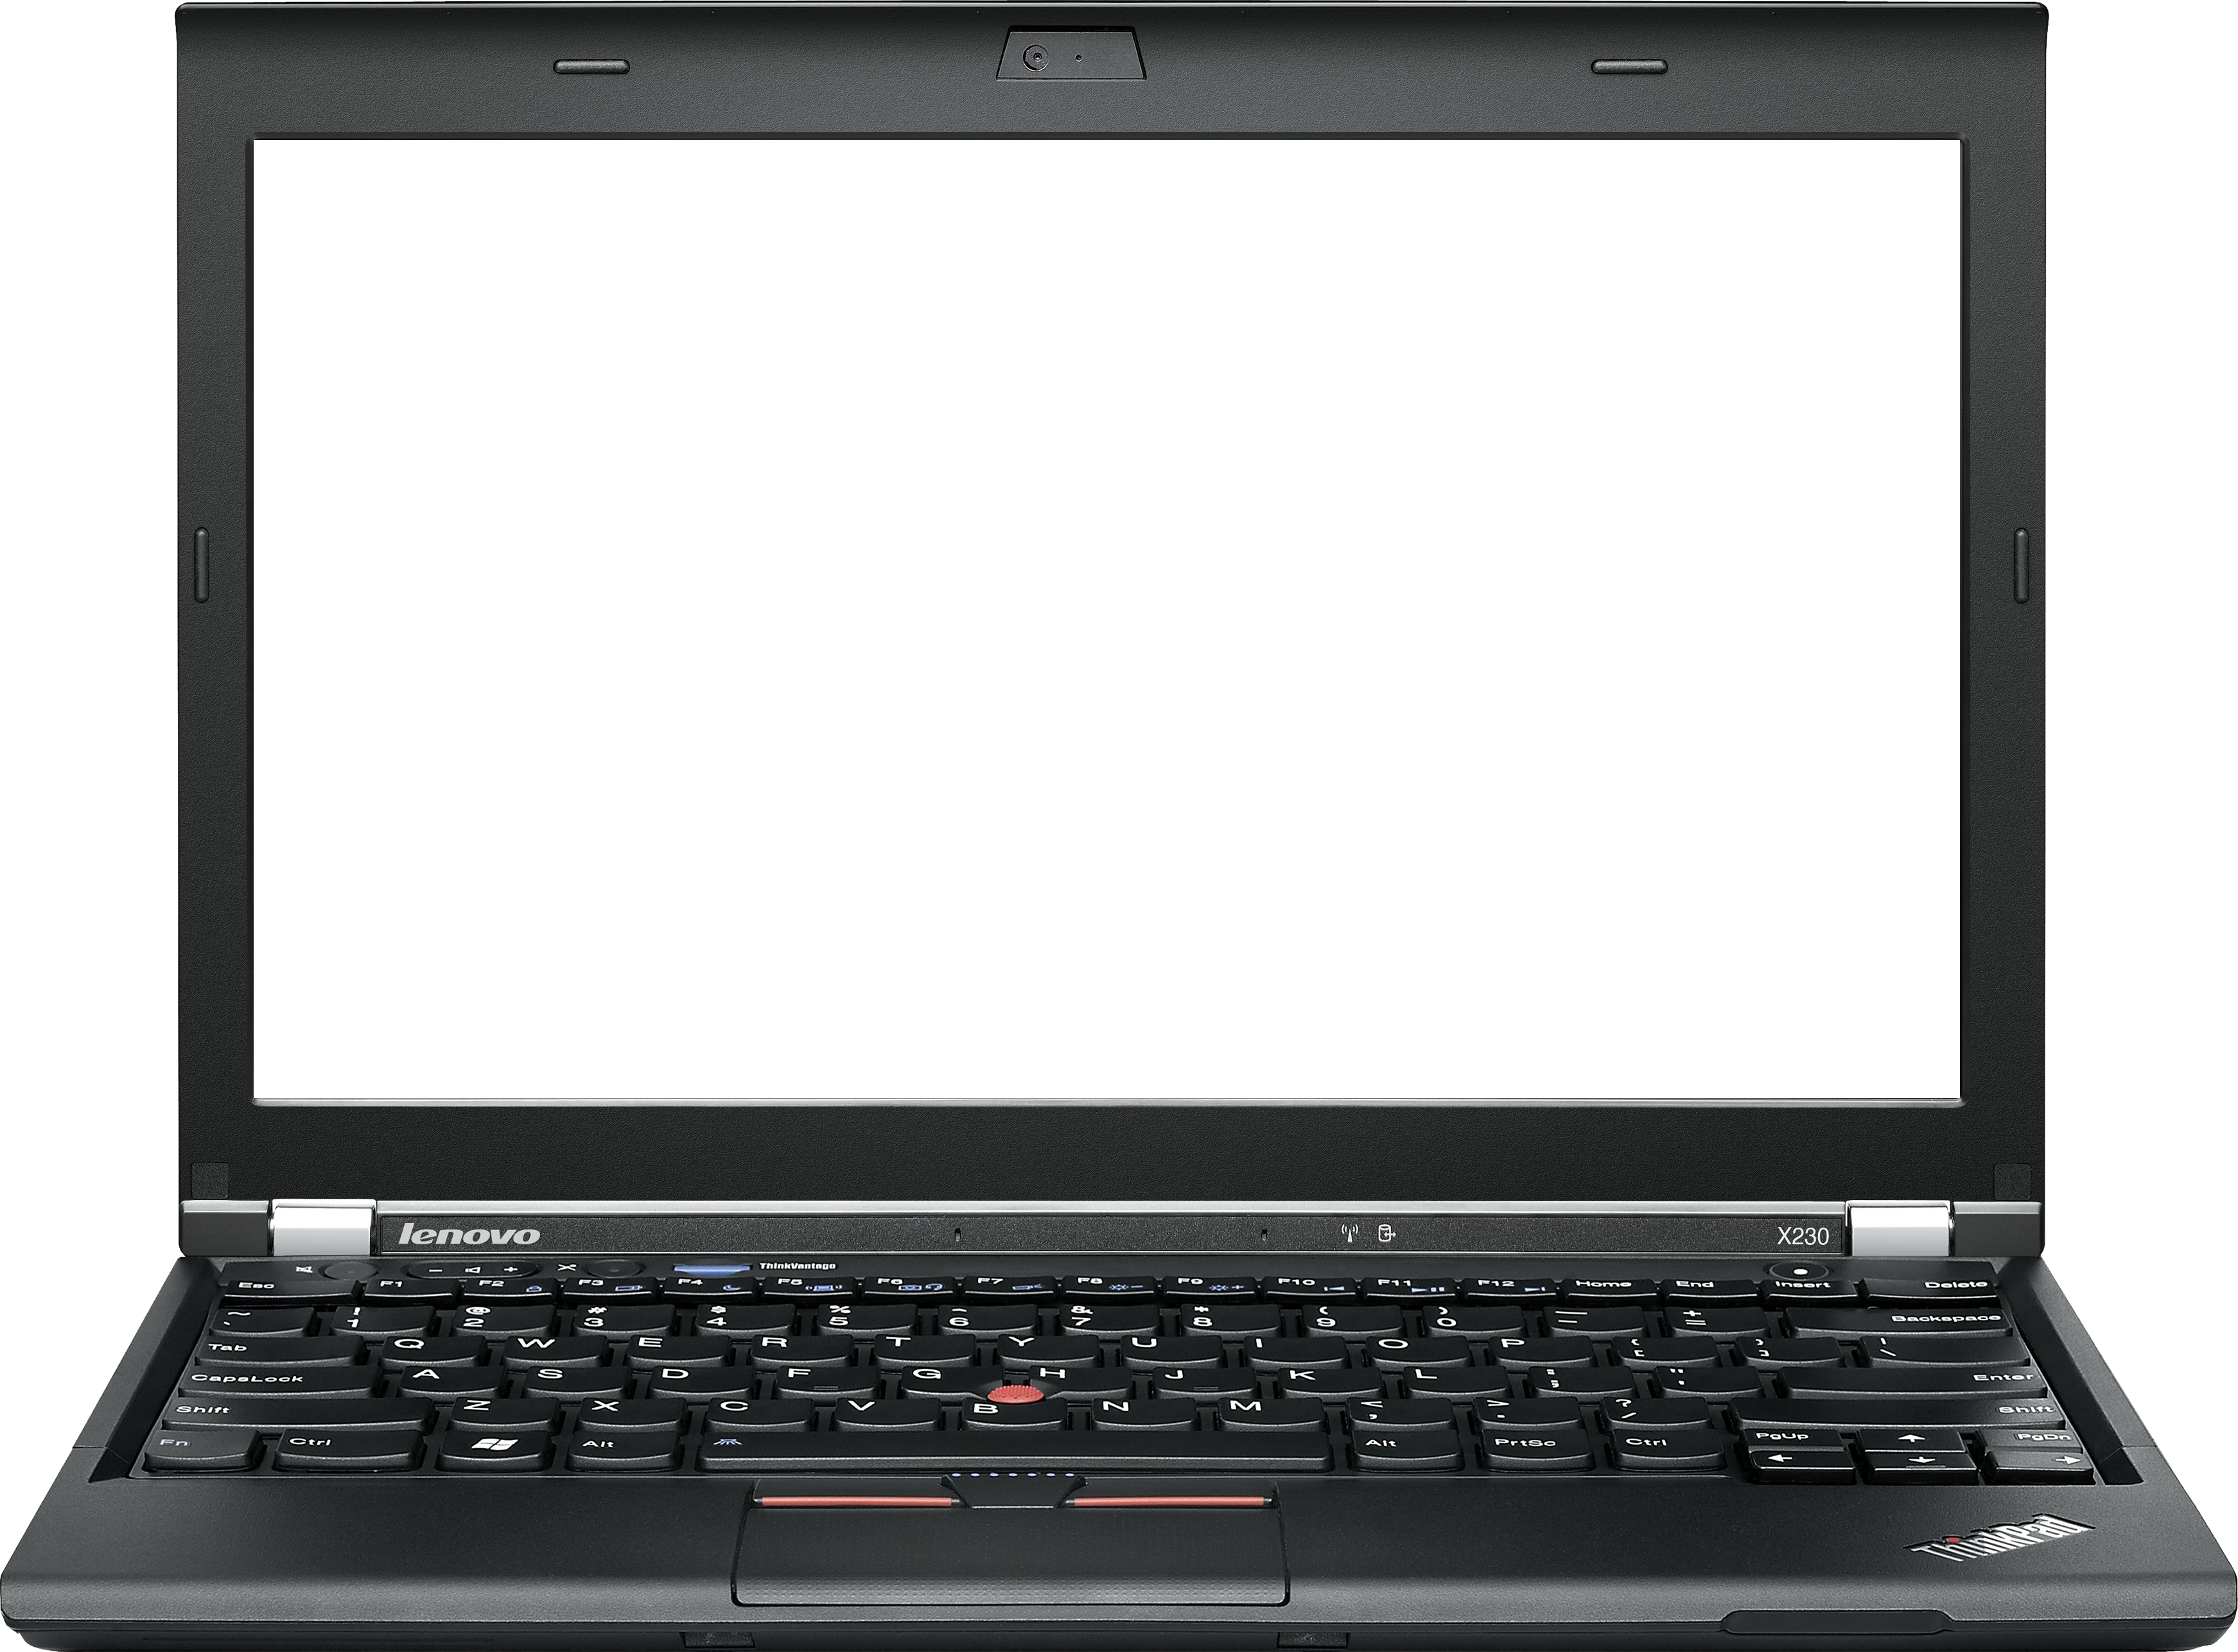 Notebook png. Ноутбук Lenovo THINKPAD x31. Ноутбук леново на белом фоне. Леново Синкпад монитор. Ноутбук без фона.